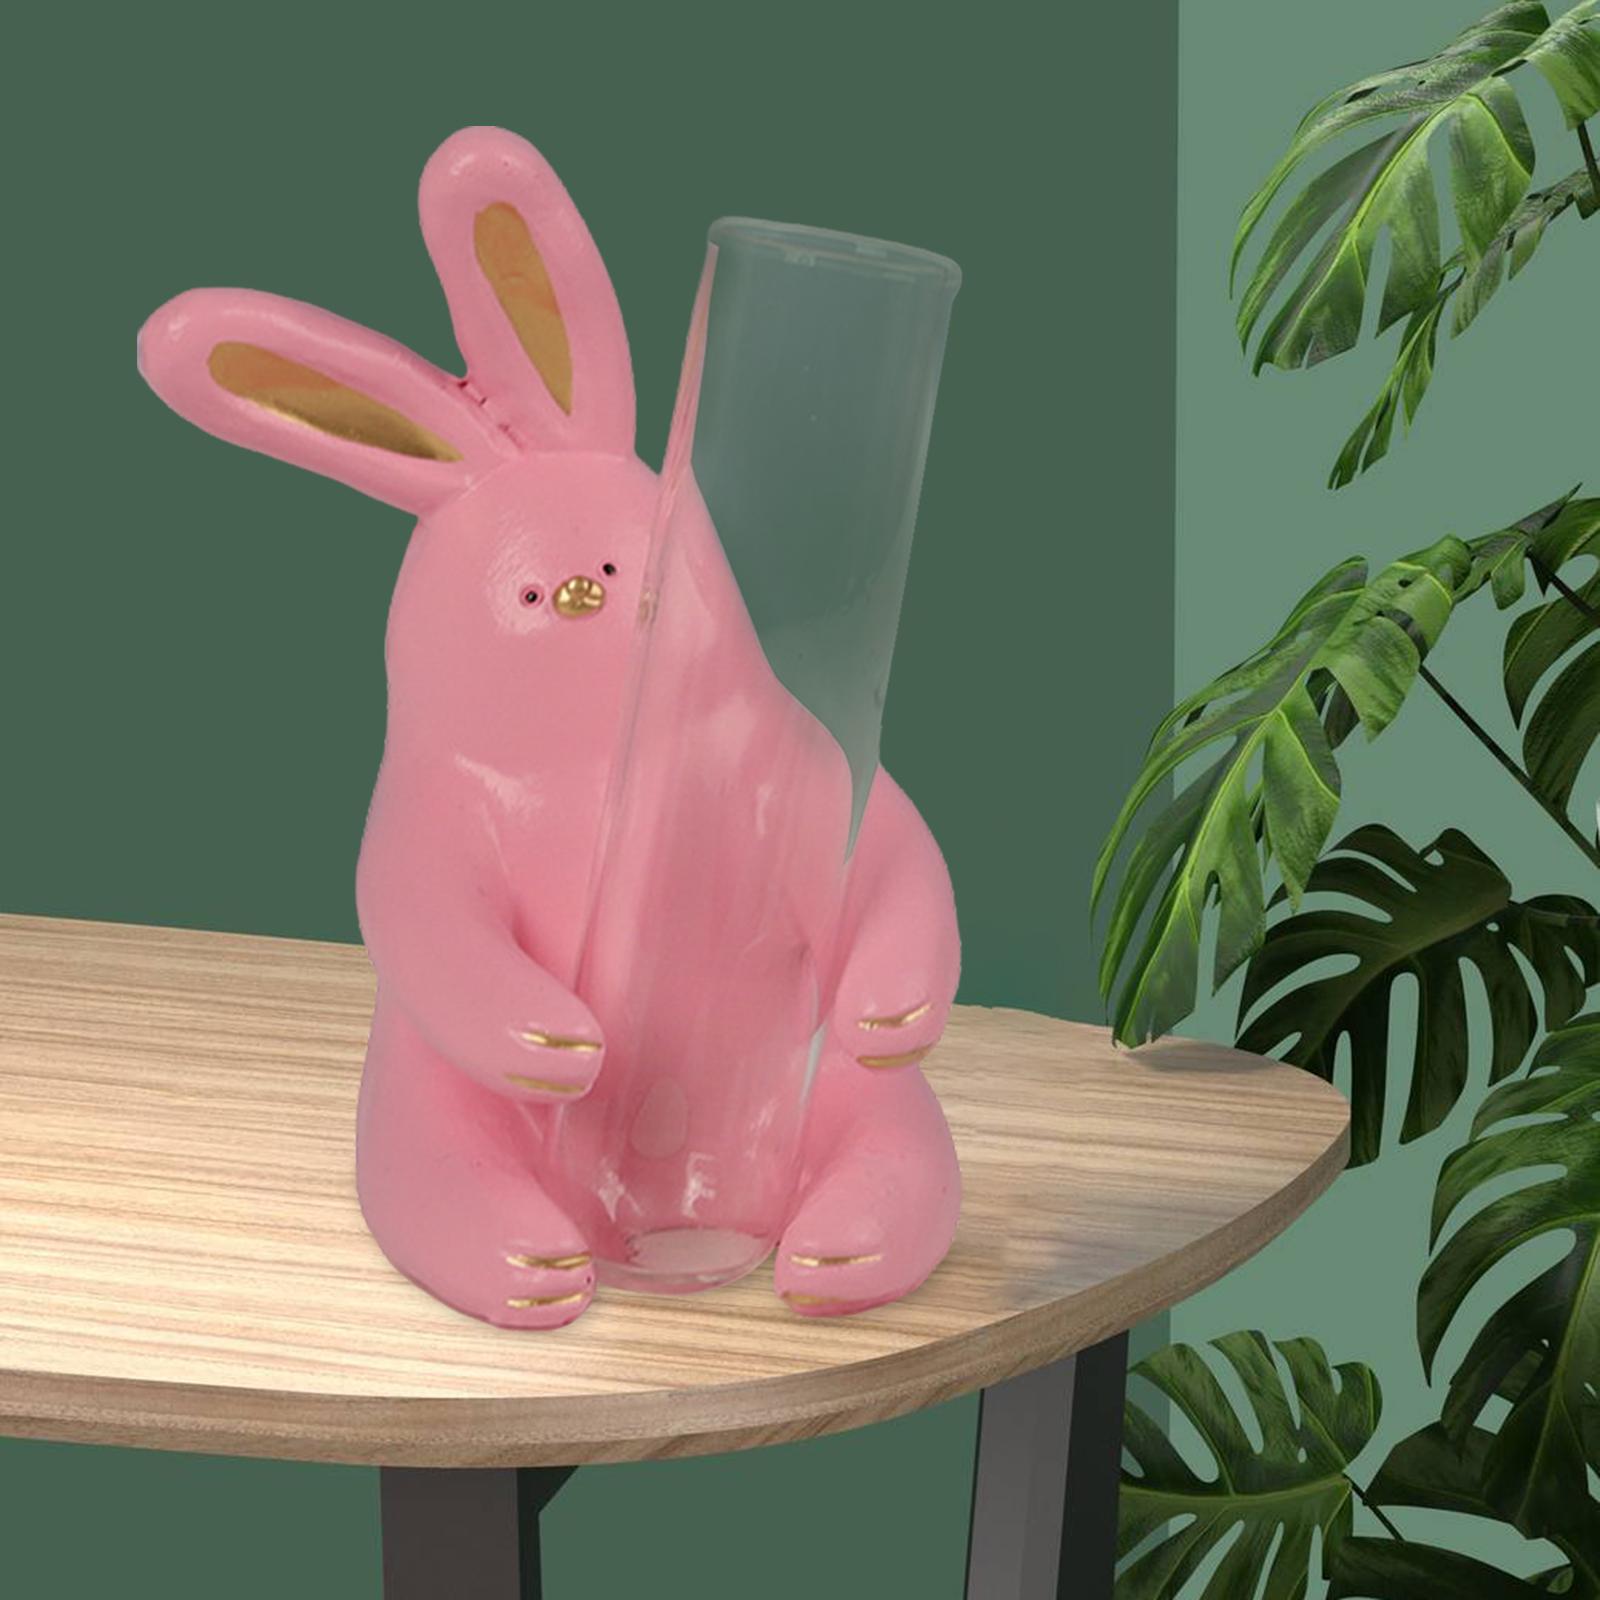 Clear Bud Vase with Animals Figures Flower Vase Home Decor Pink Rabbit